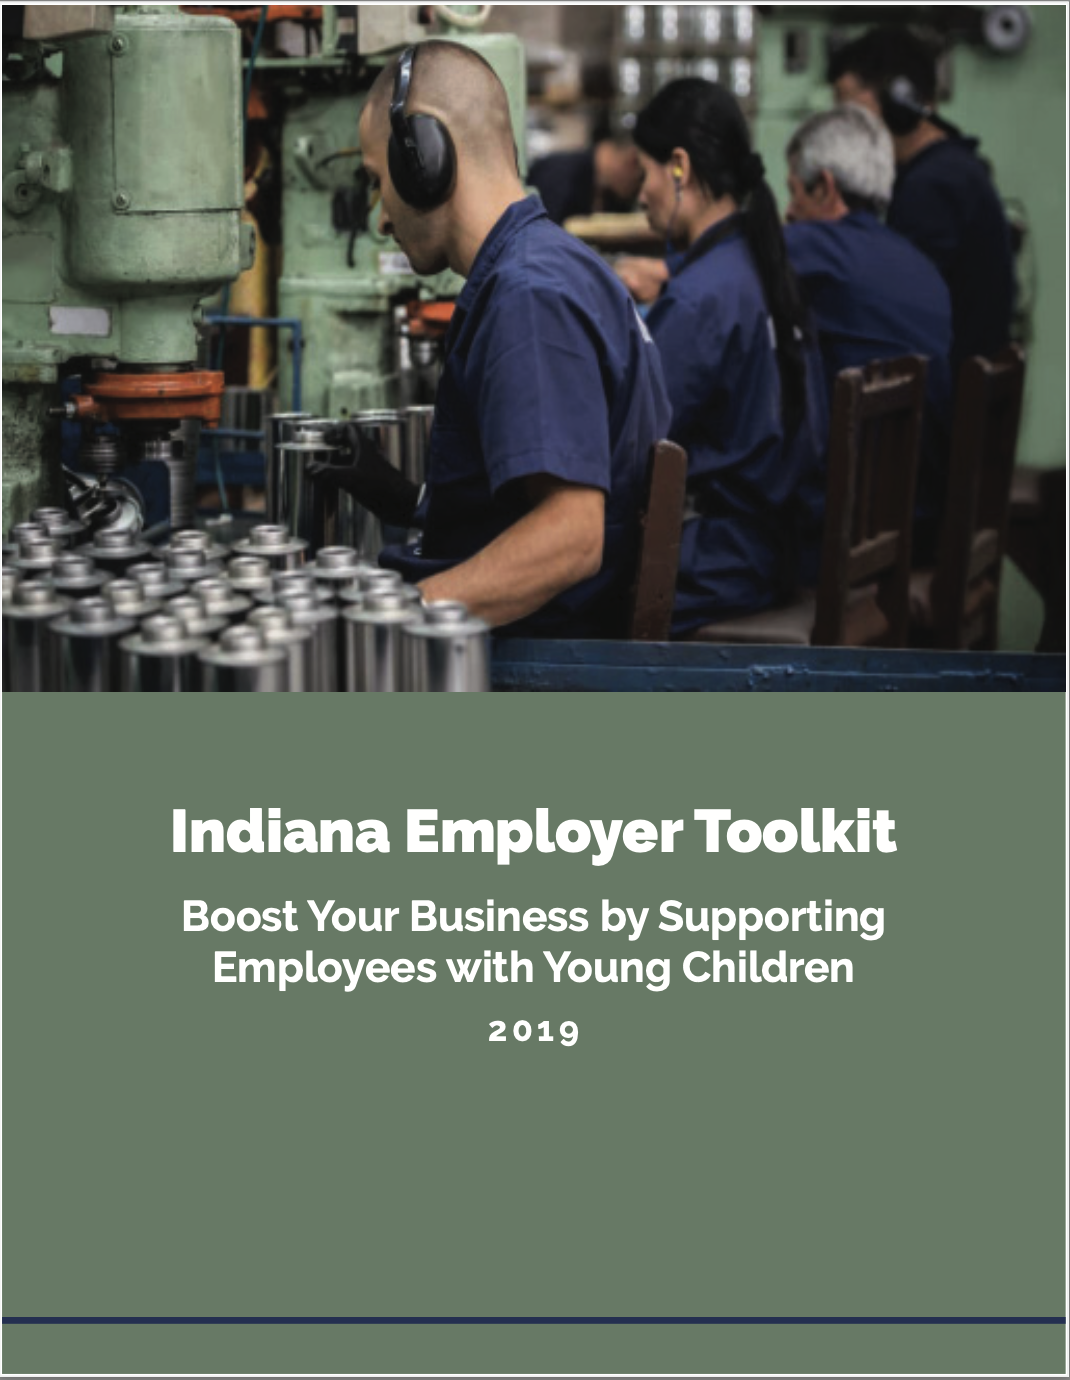 Indiana Employer Toolkit Thumbnail